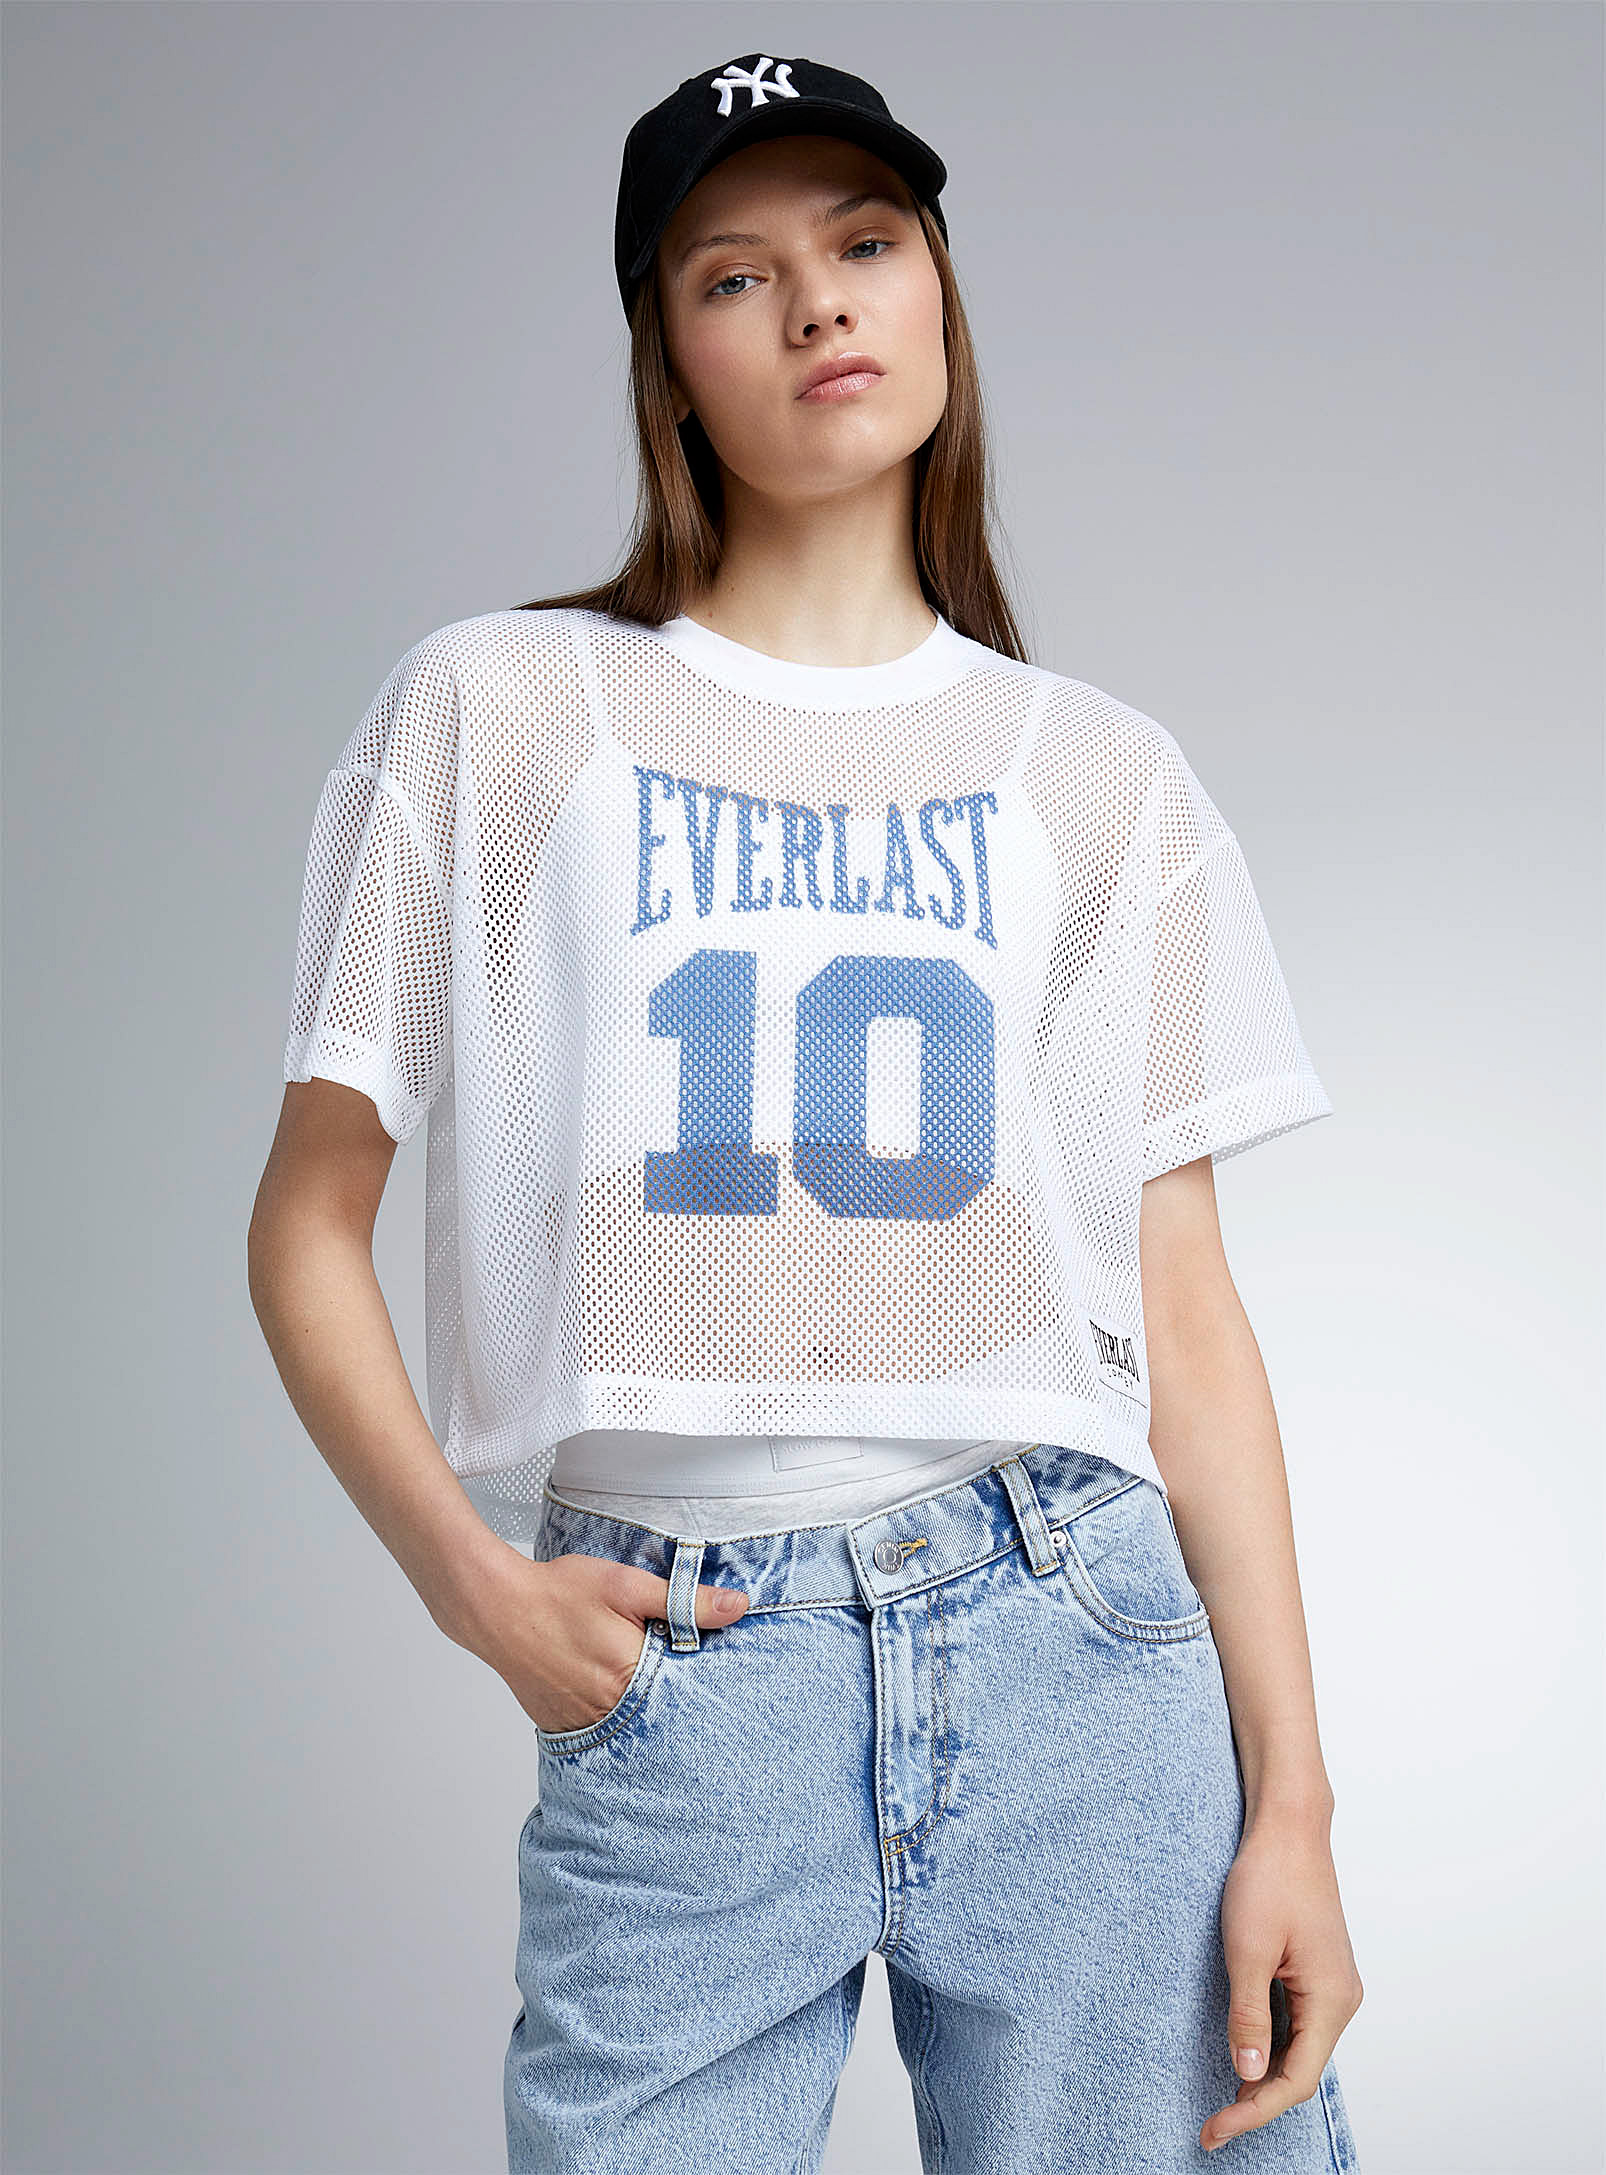 Coney Island Picnic - Le t-shirt football filet numéro 10